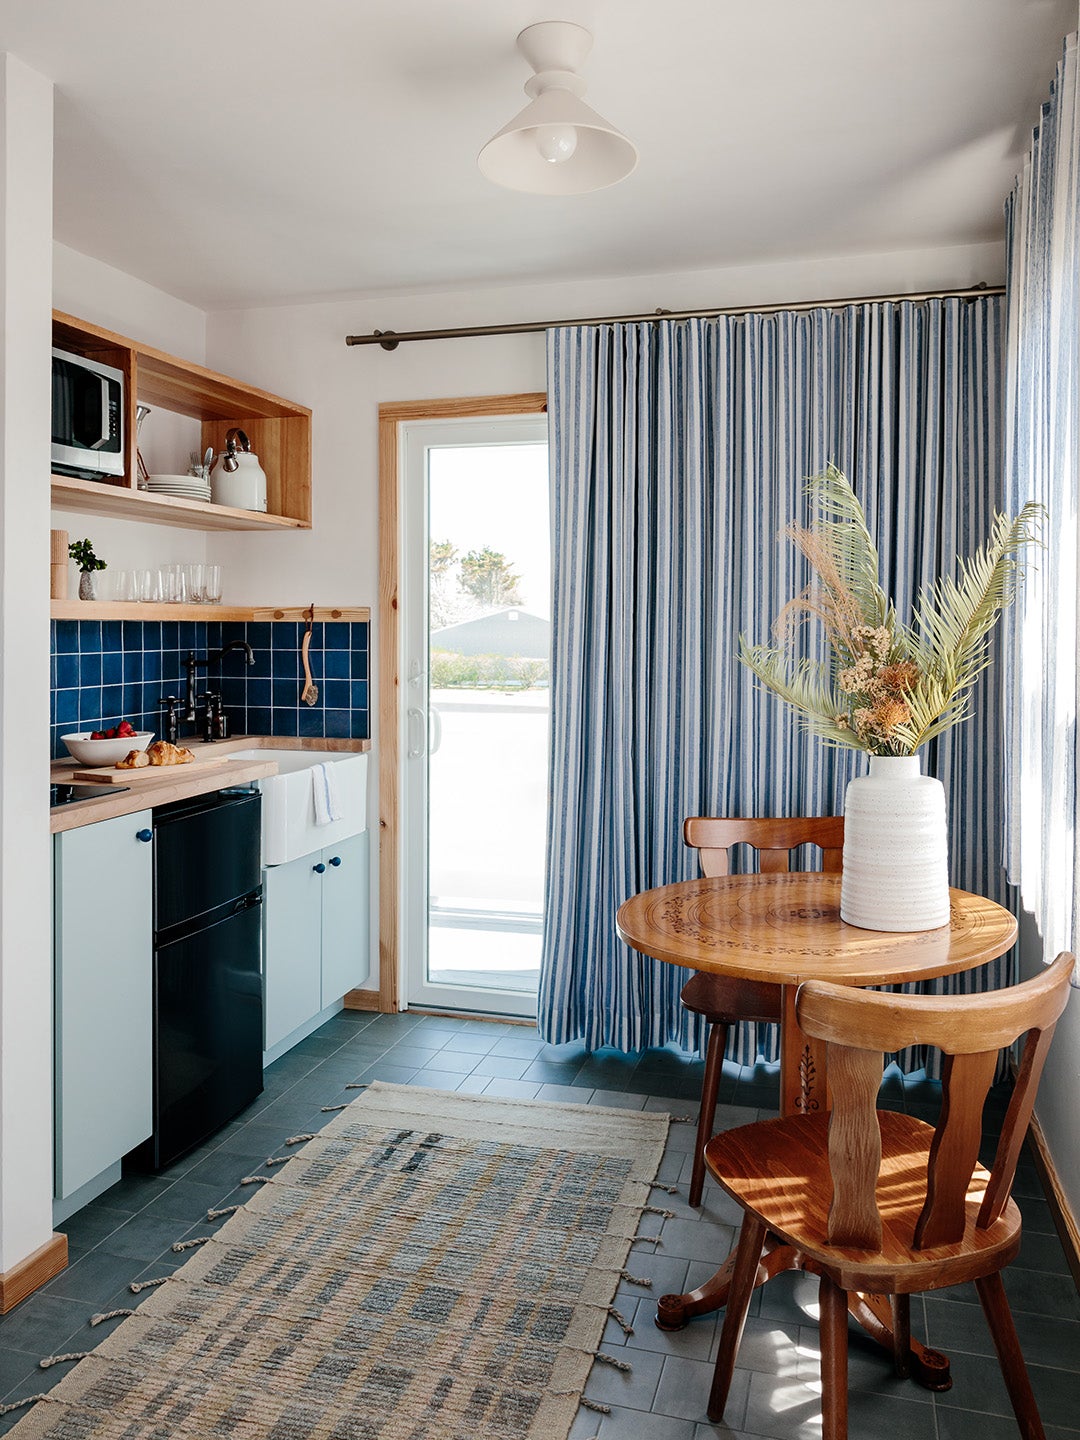 Motel kitchen with blue tile